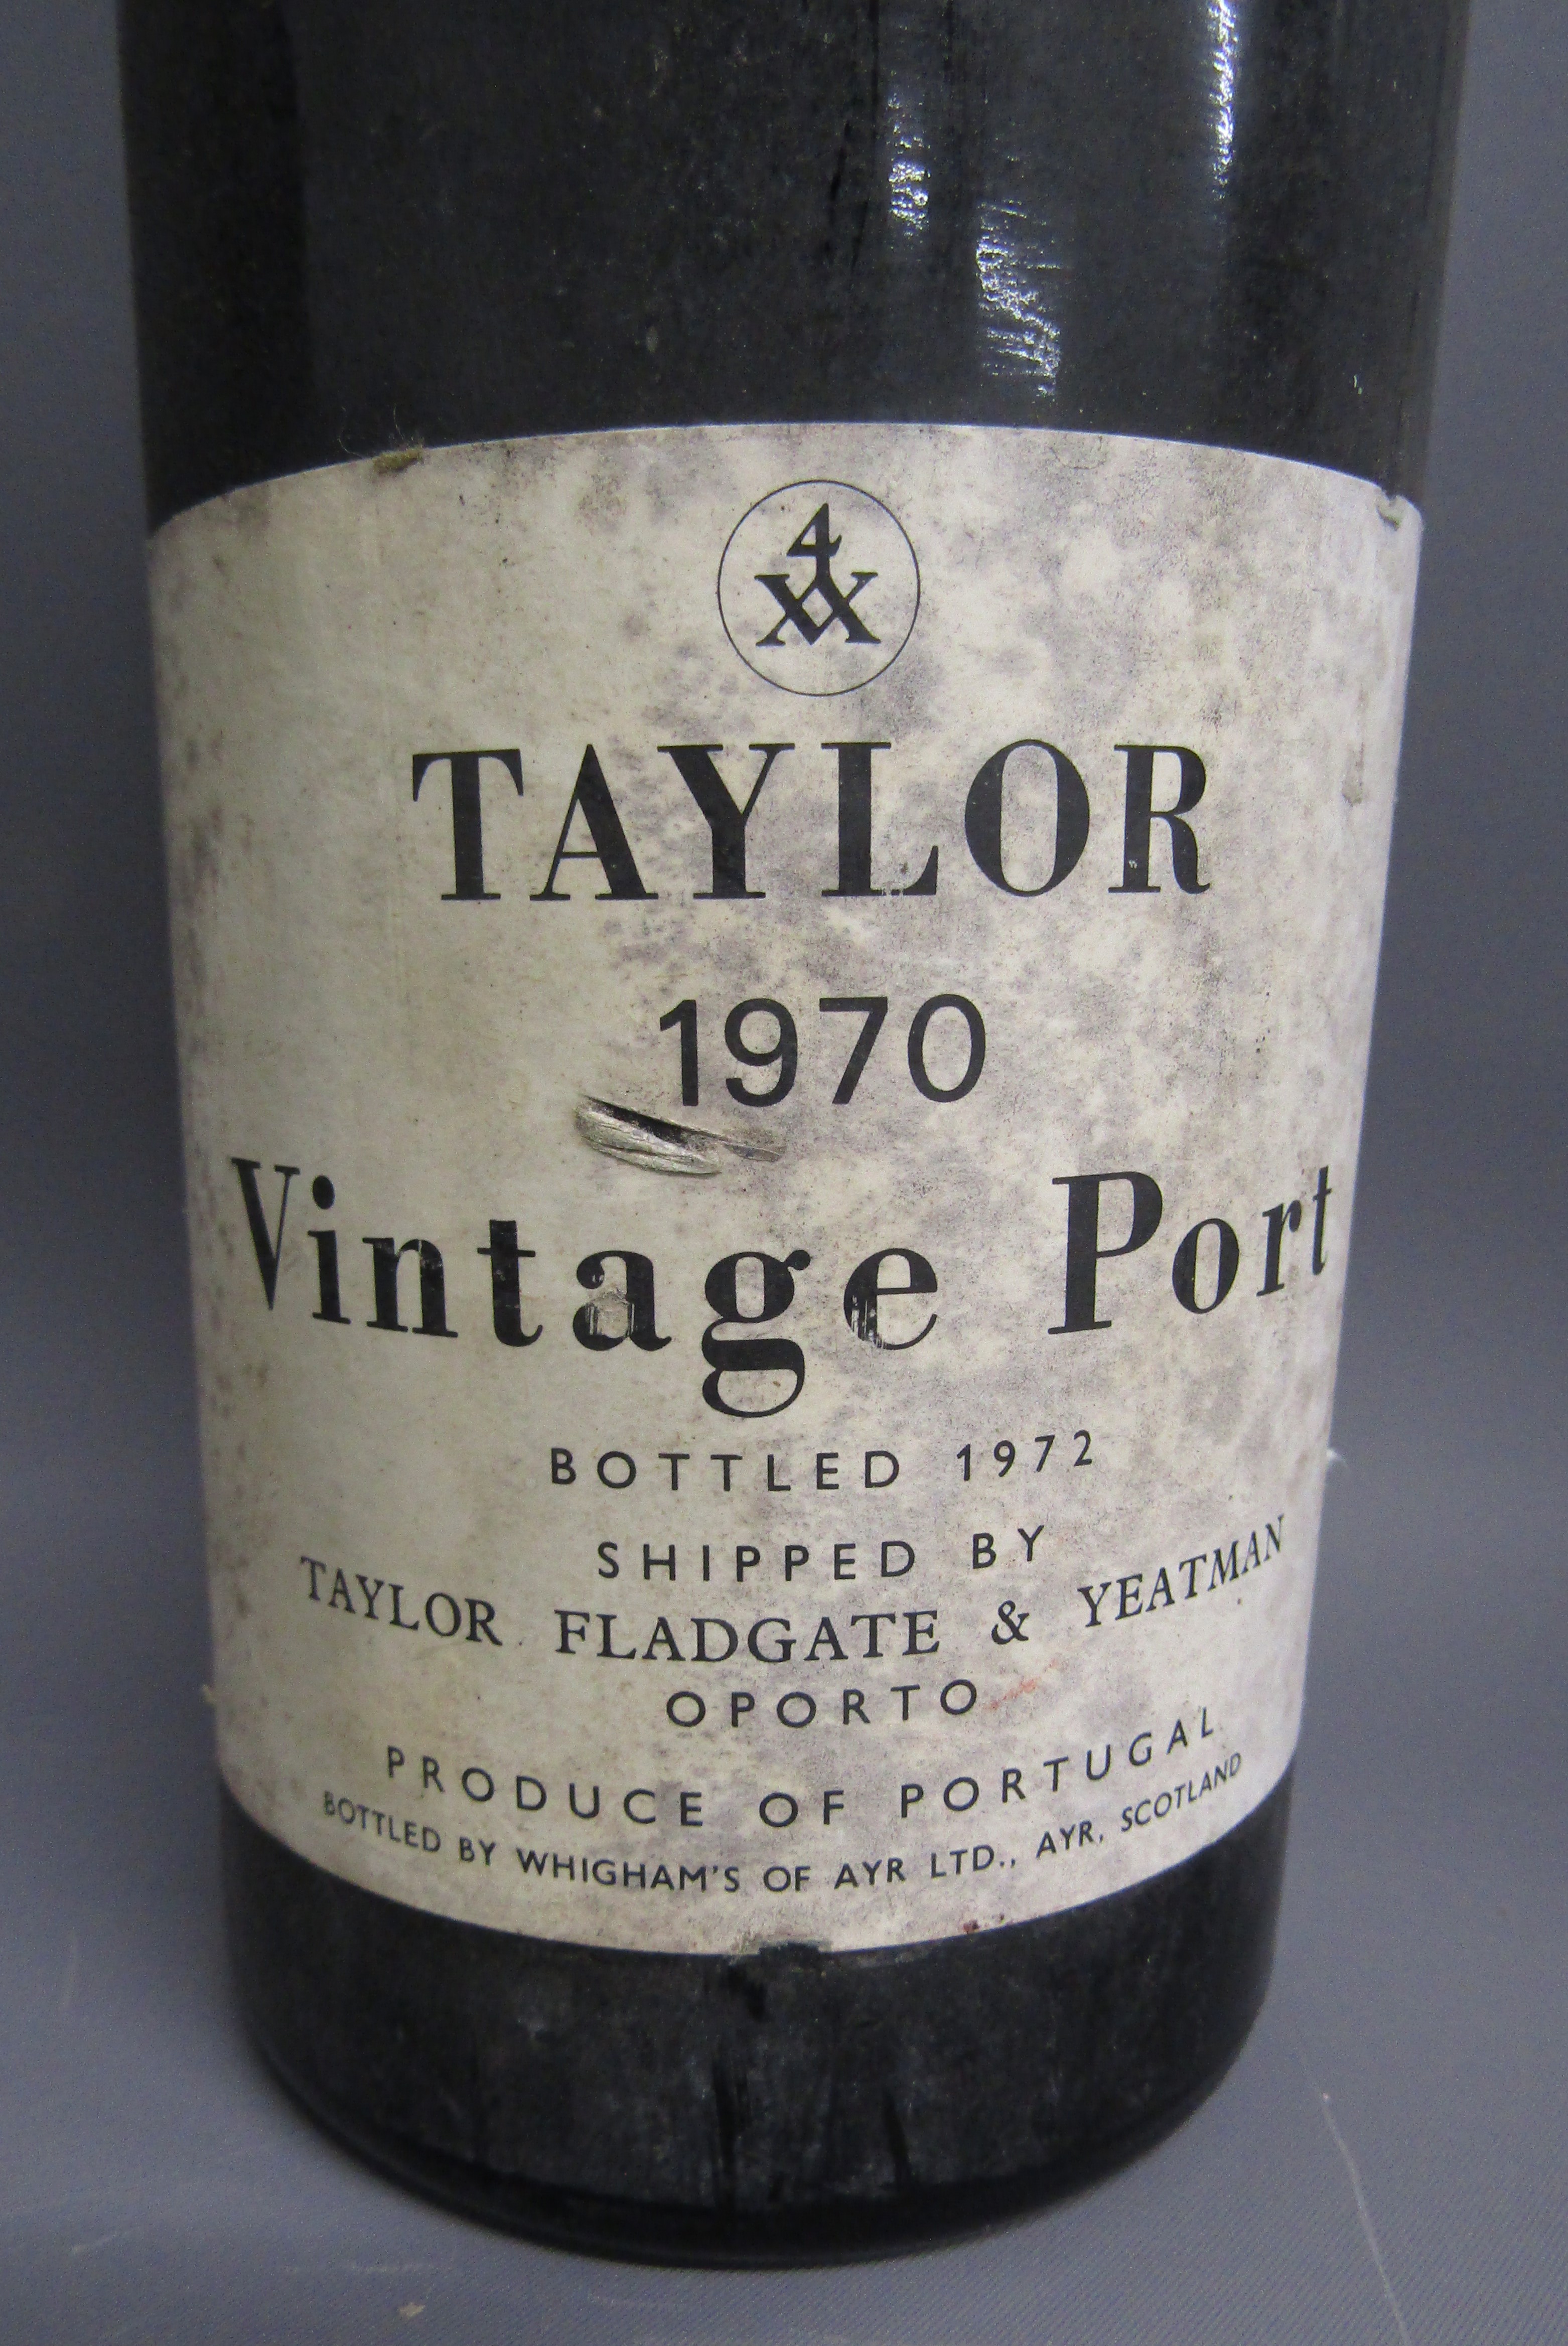 3 bottles of port - Cachao vintage port, Taylor 1970 vintage port and Special Reserve Porto Crua - Image 4 of 7